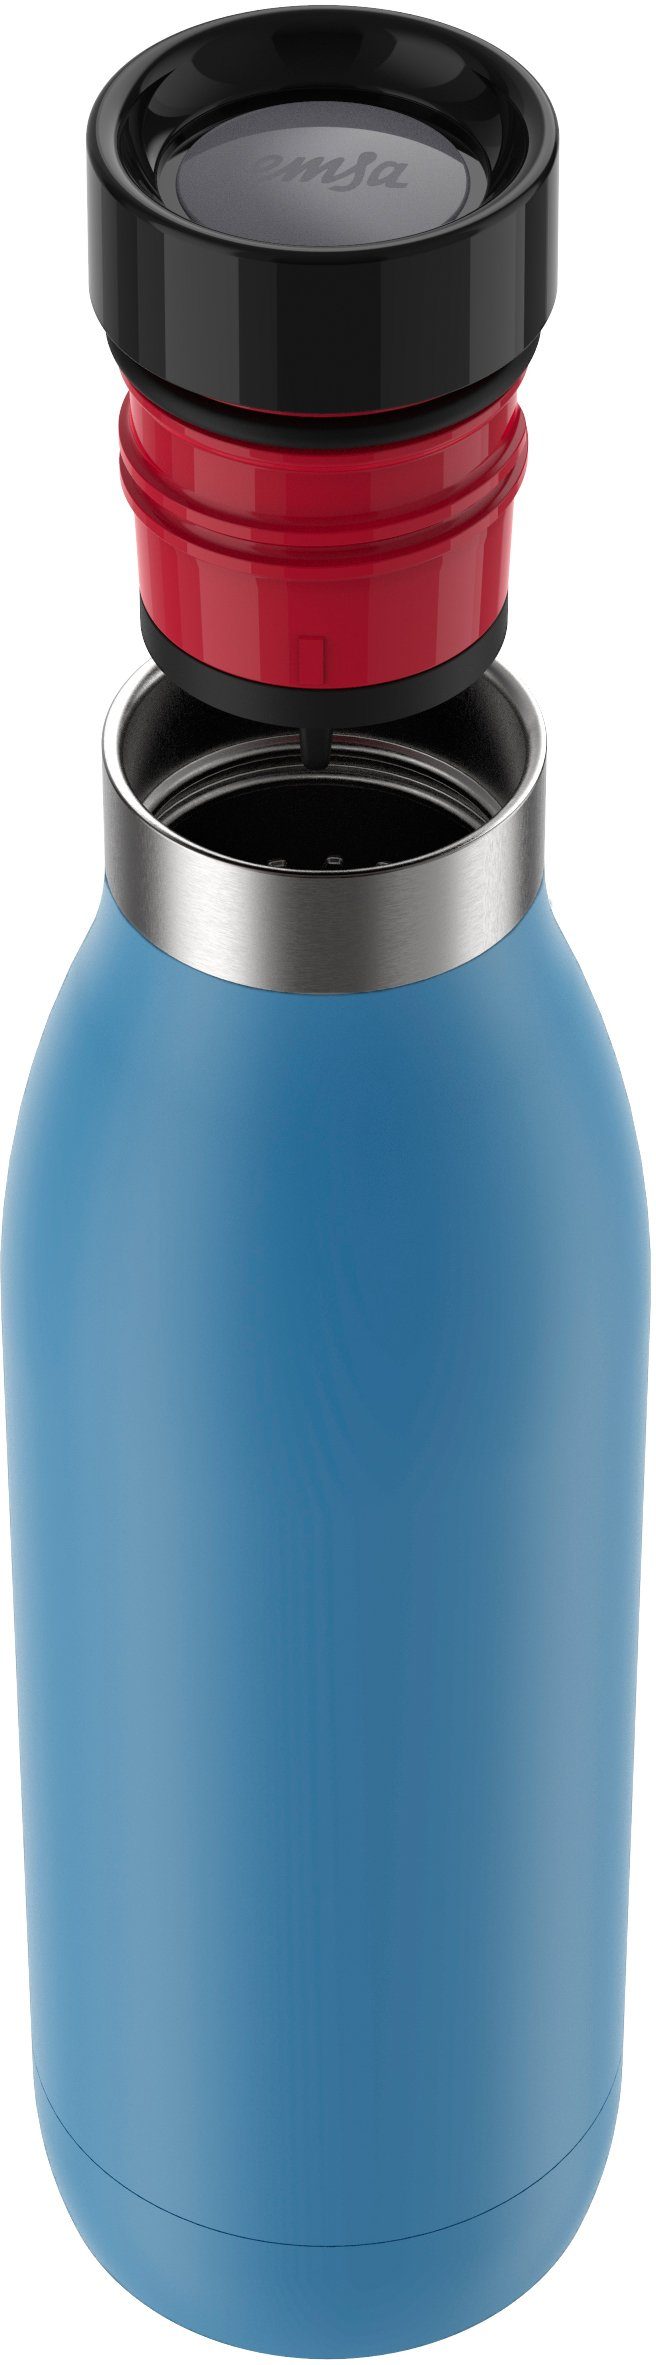 Bludrop kühl, Edelstahl, warm/24h Deckel, Quick-Press 12h Emsa aquablau Trinkflasche spülmaschinenfest Color,